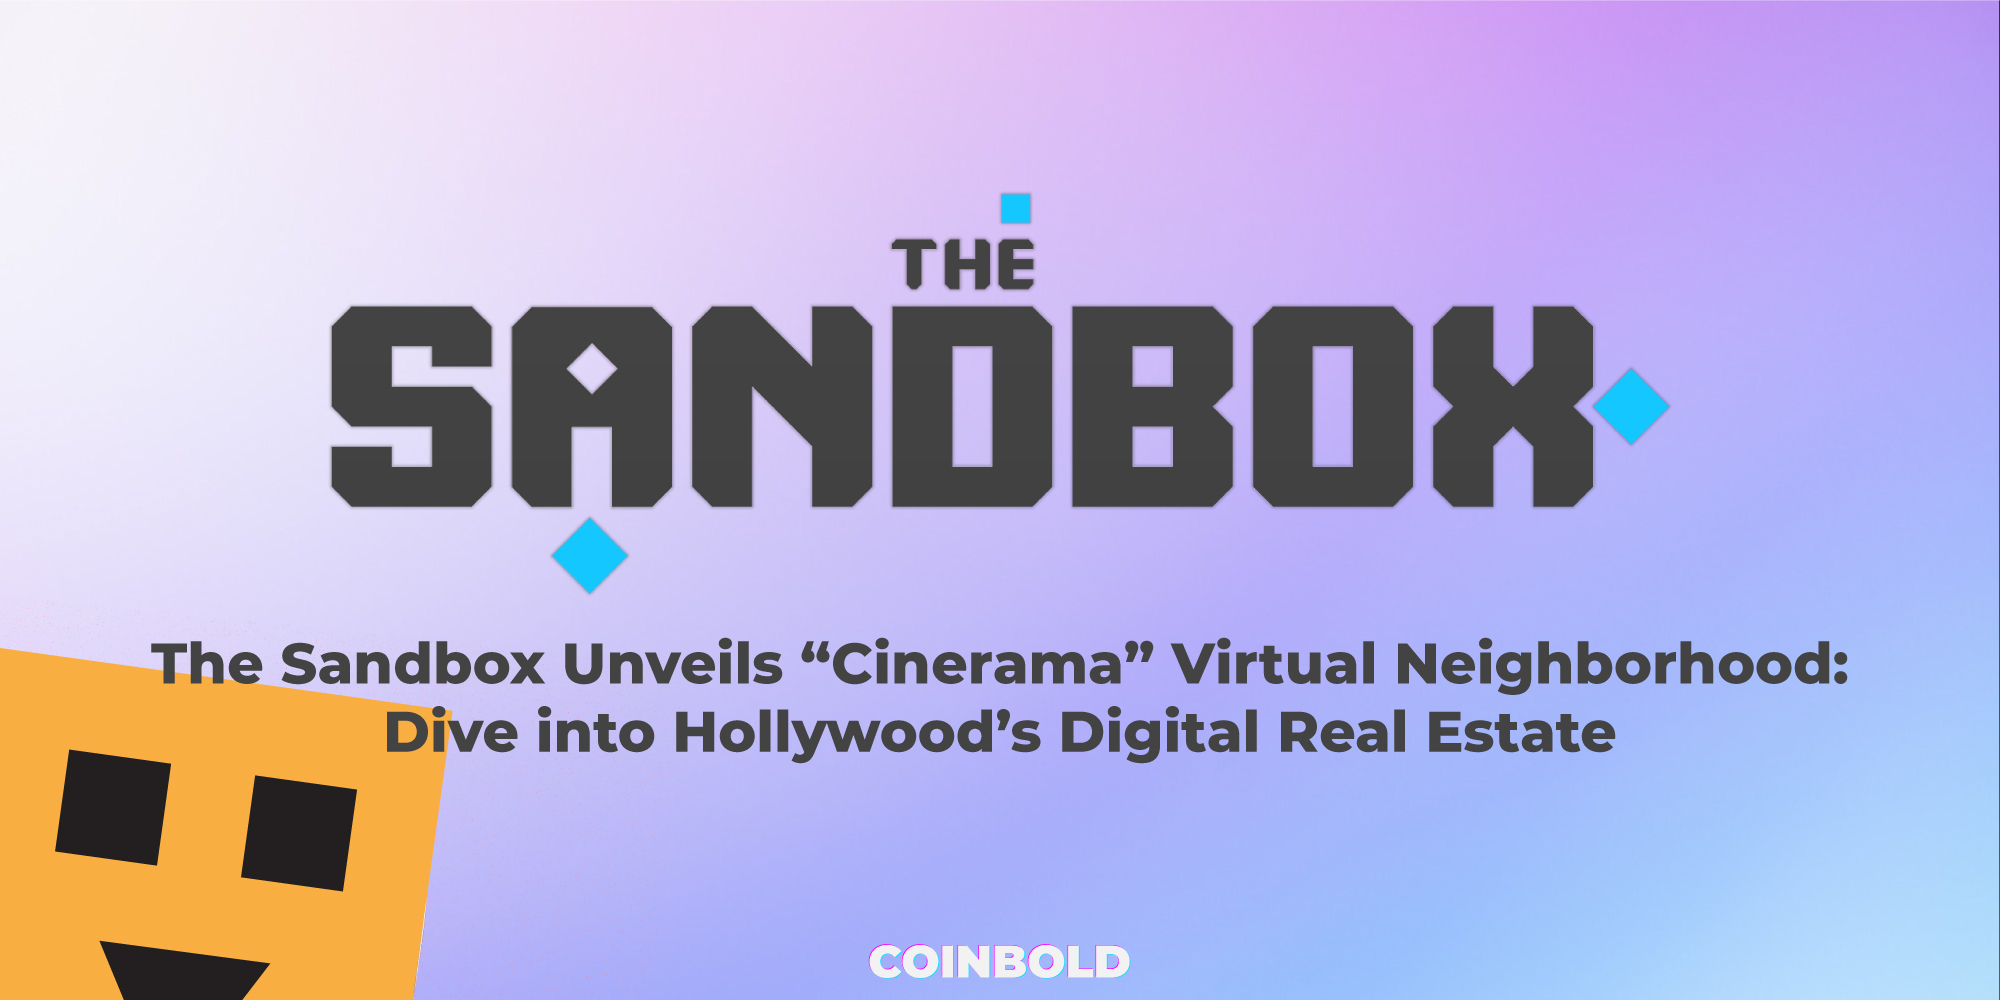 The Sandbox Unveils “Cinerama” Virtual Neighborhood Dive into Hollywood’s Digital Real Estate